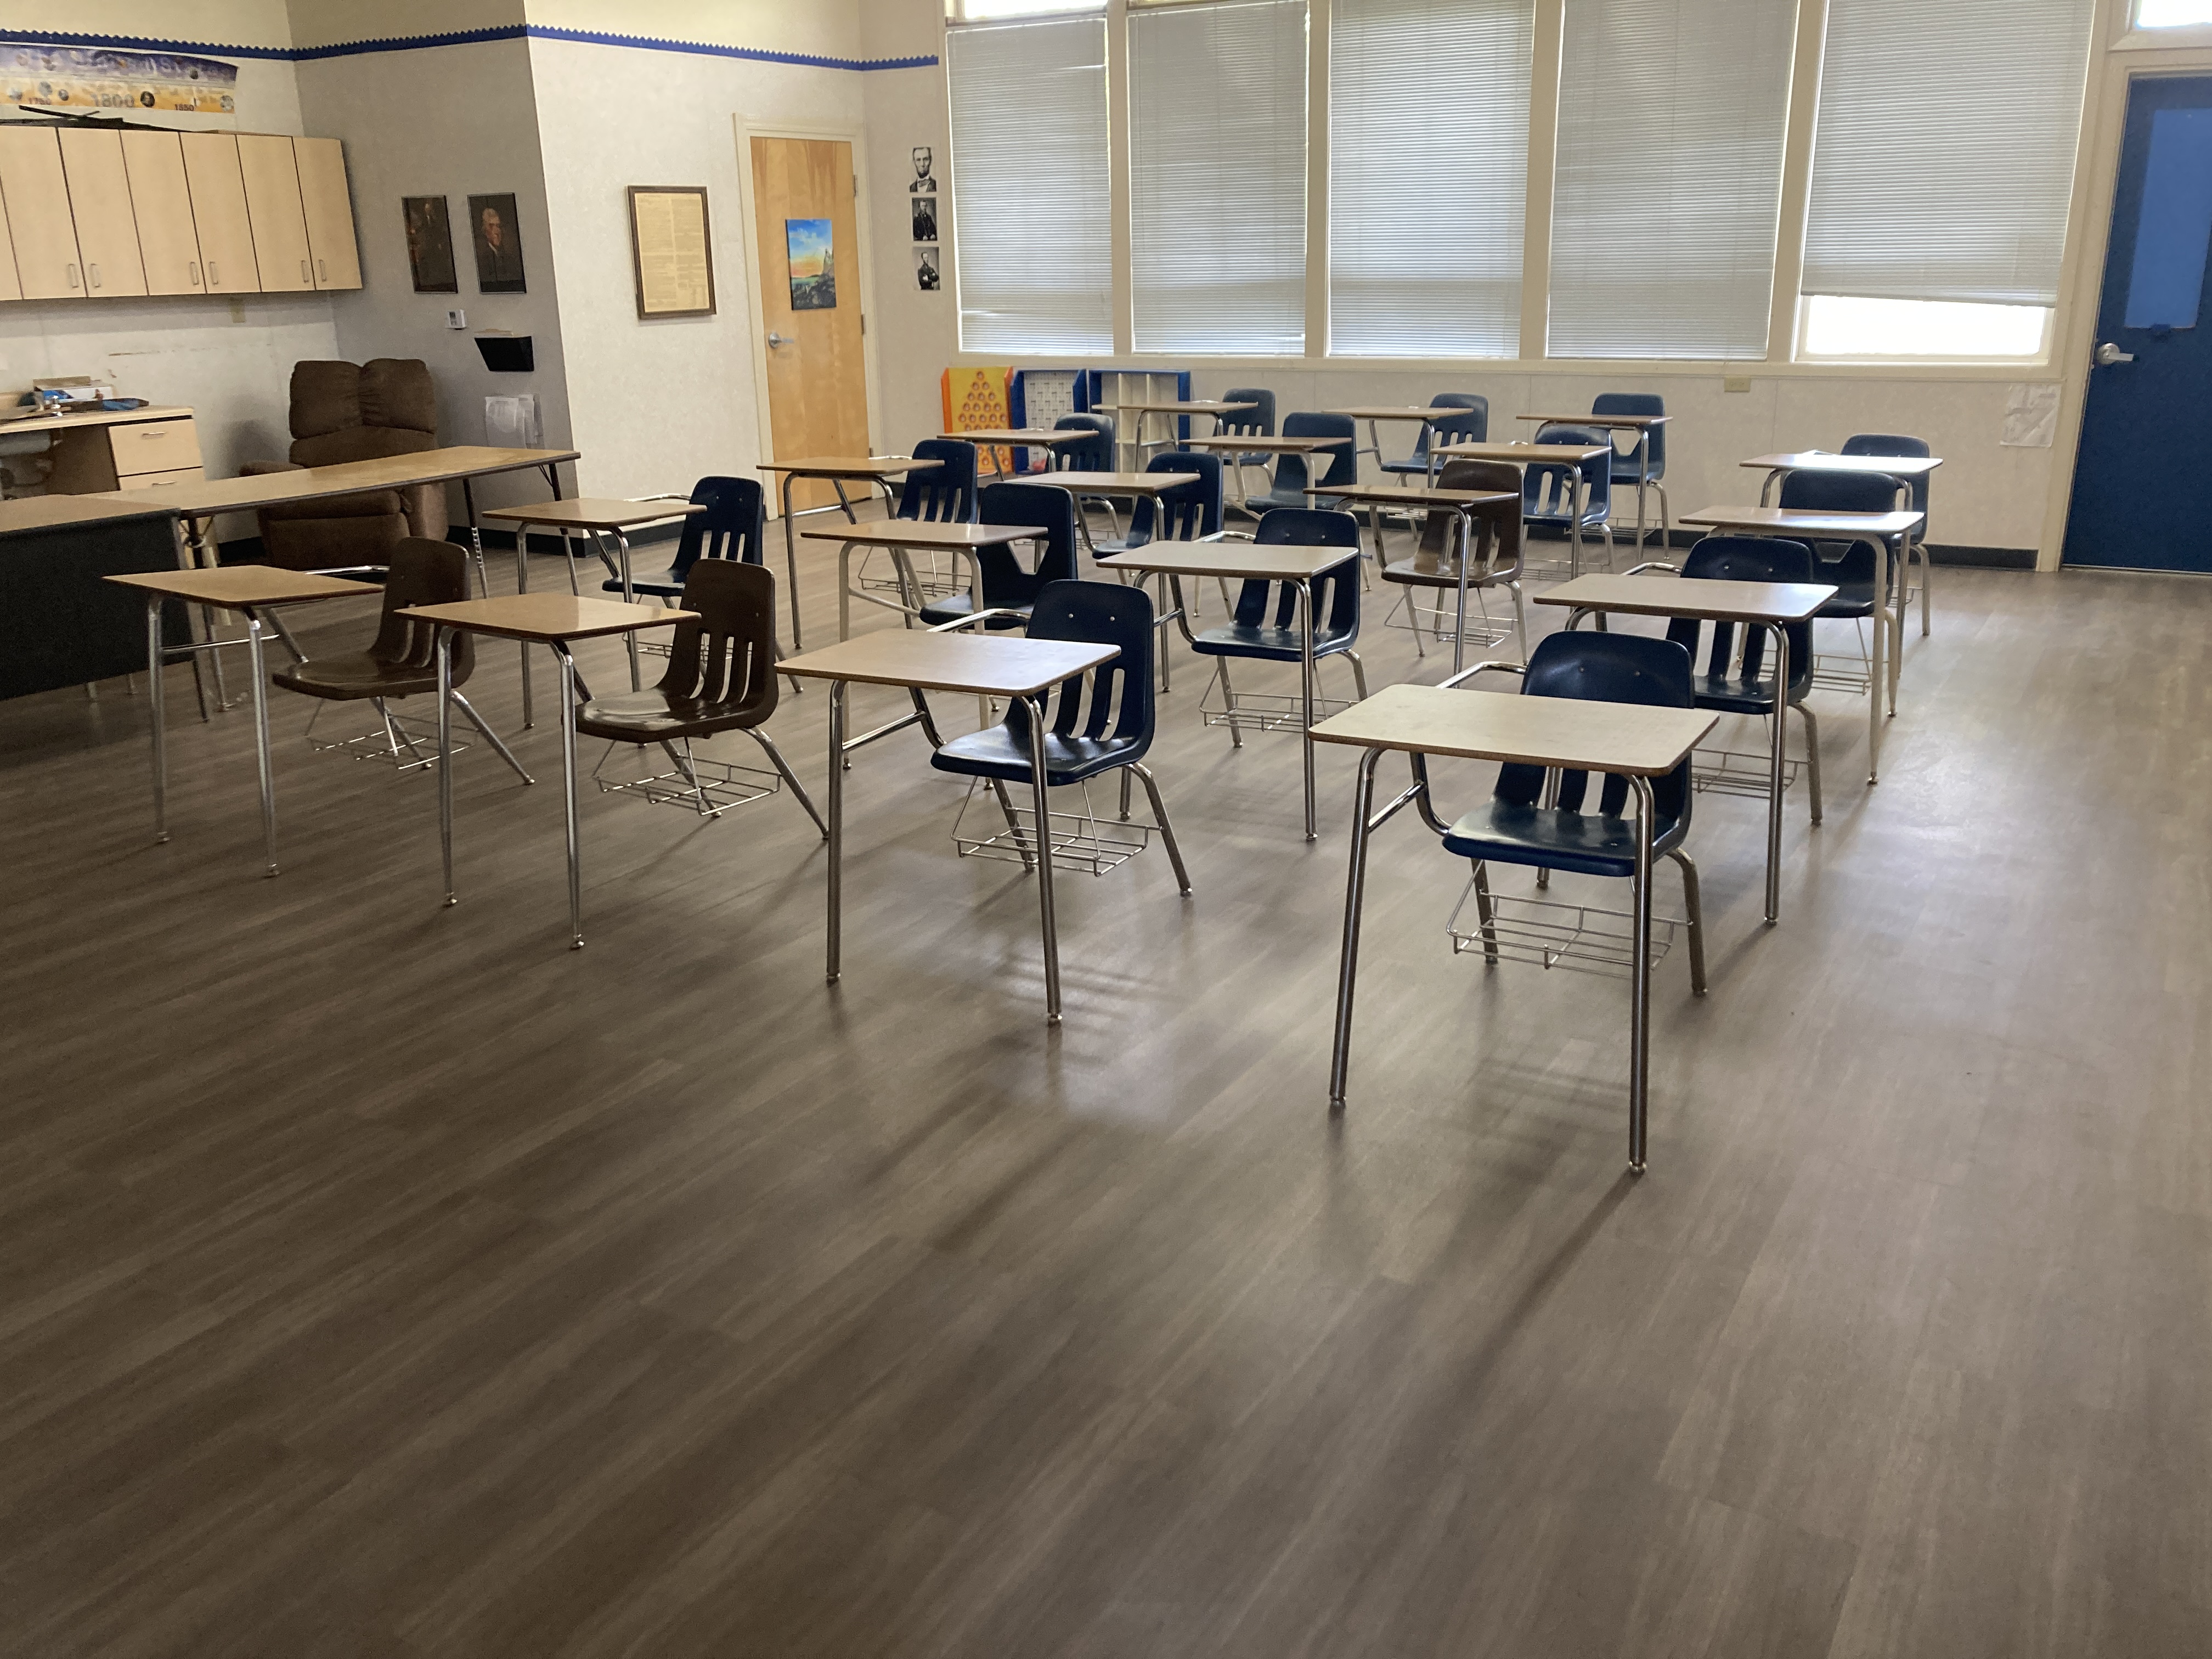 New Classroom Flooring!